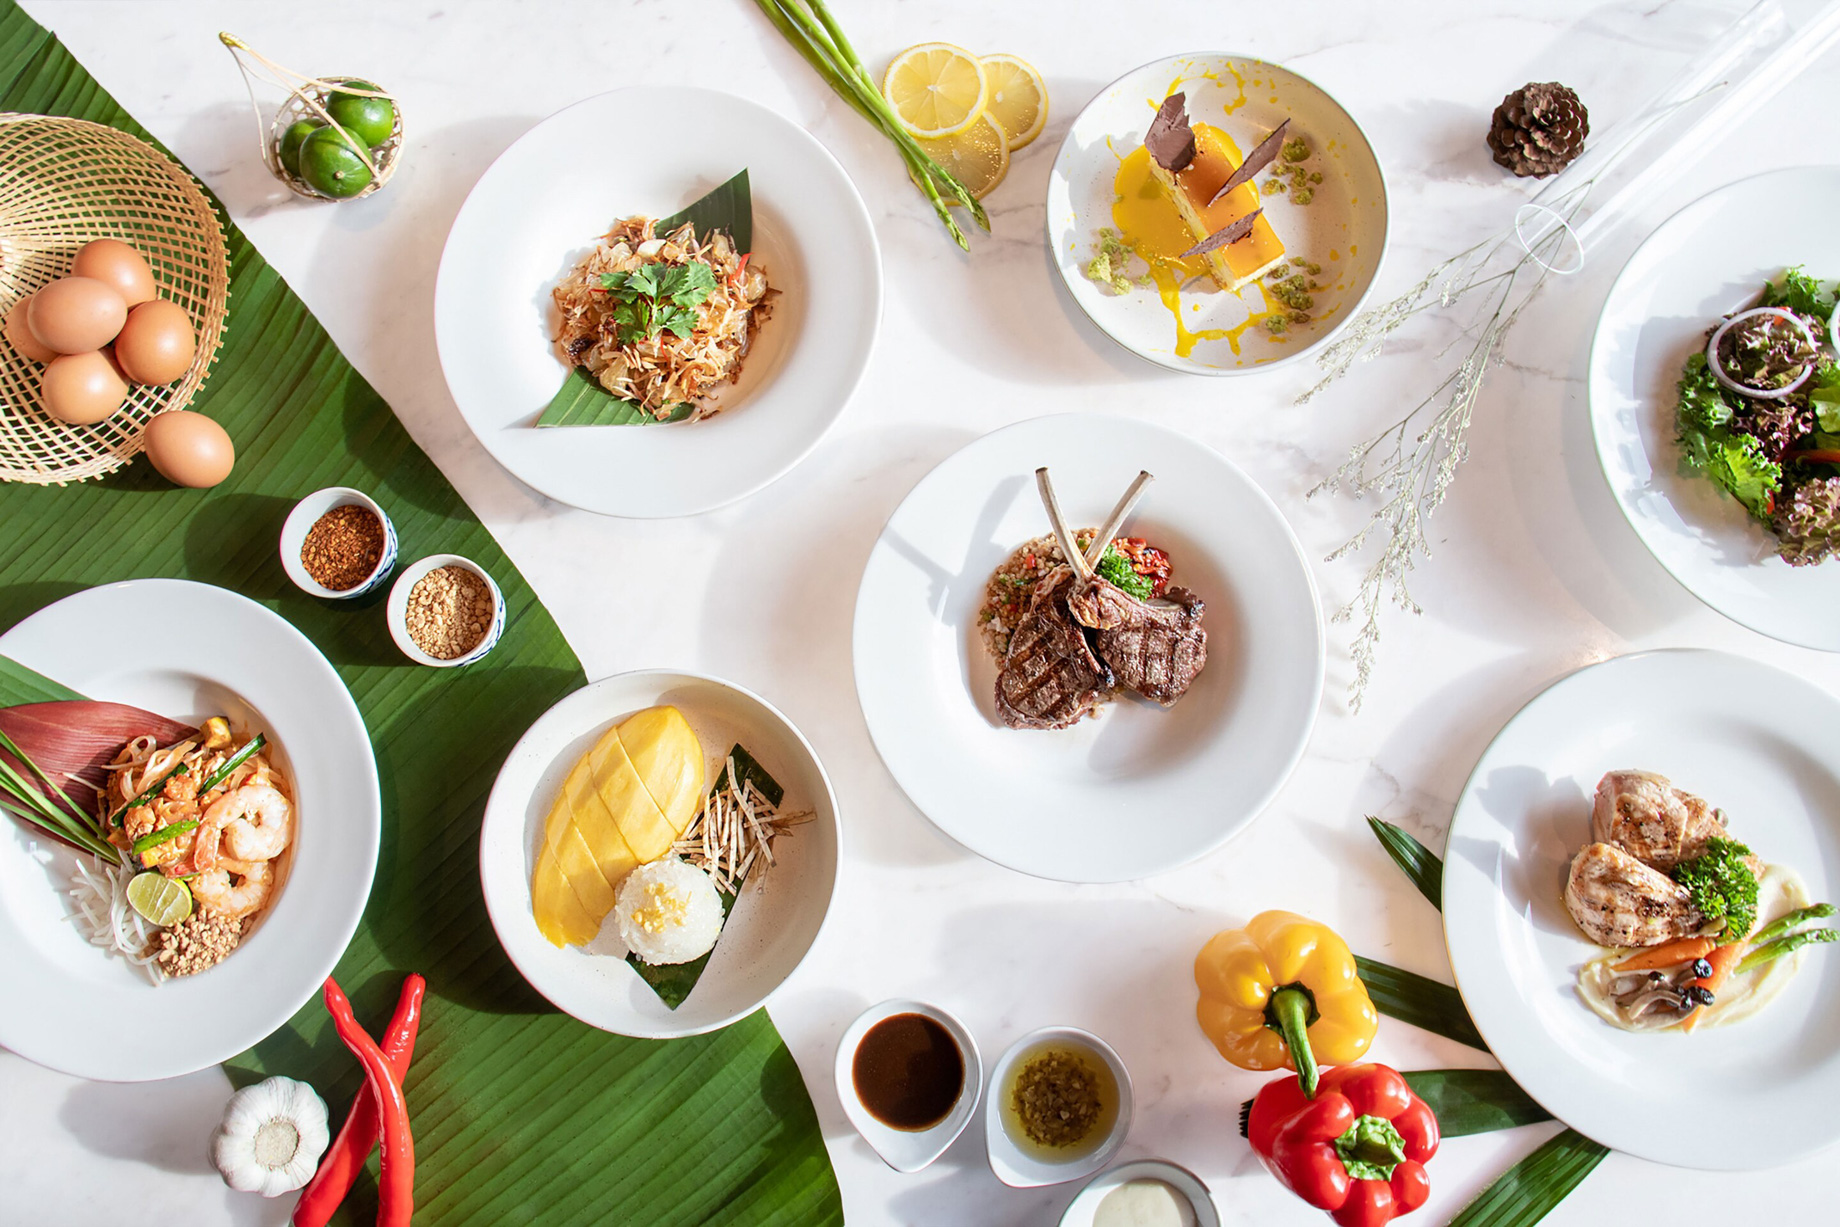 The St. Regis Bangkok Hotel – Bangkok, Thailand – Signature Gourmet Dishes